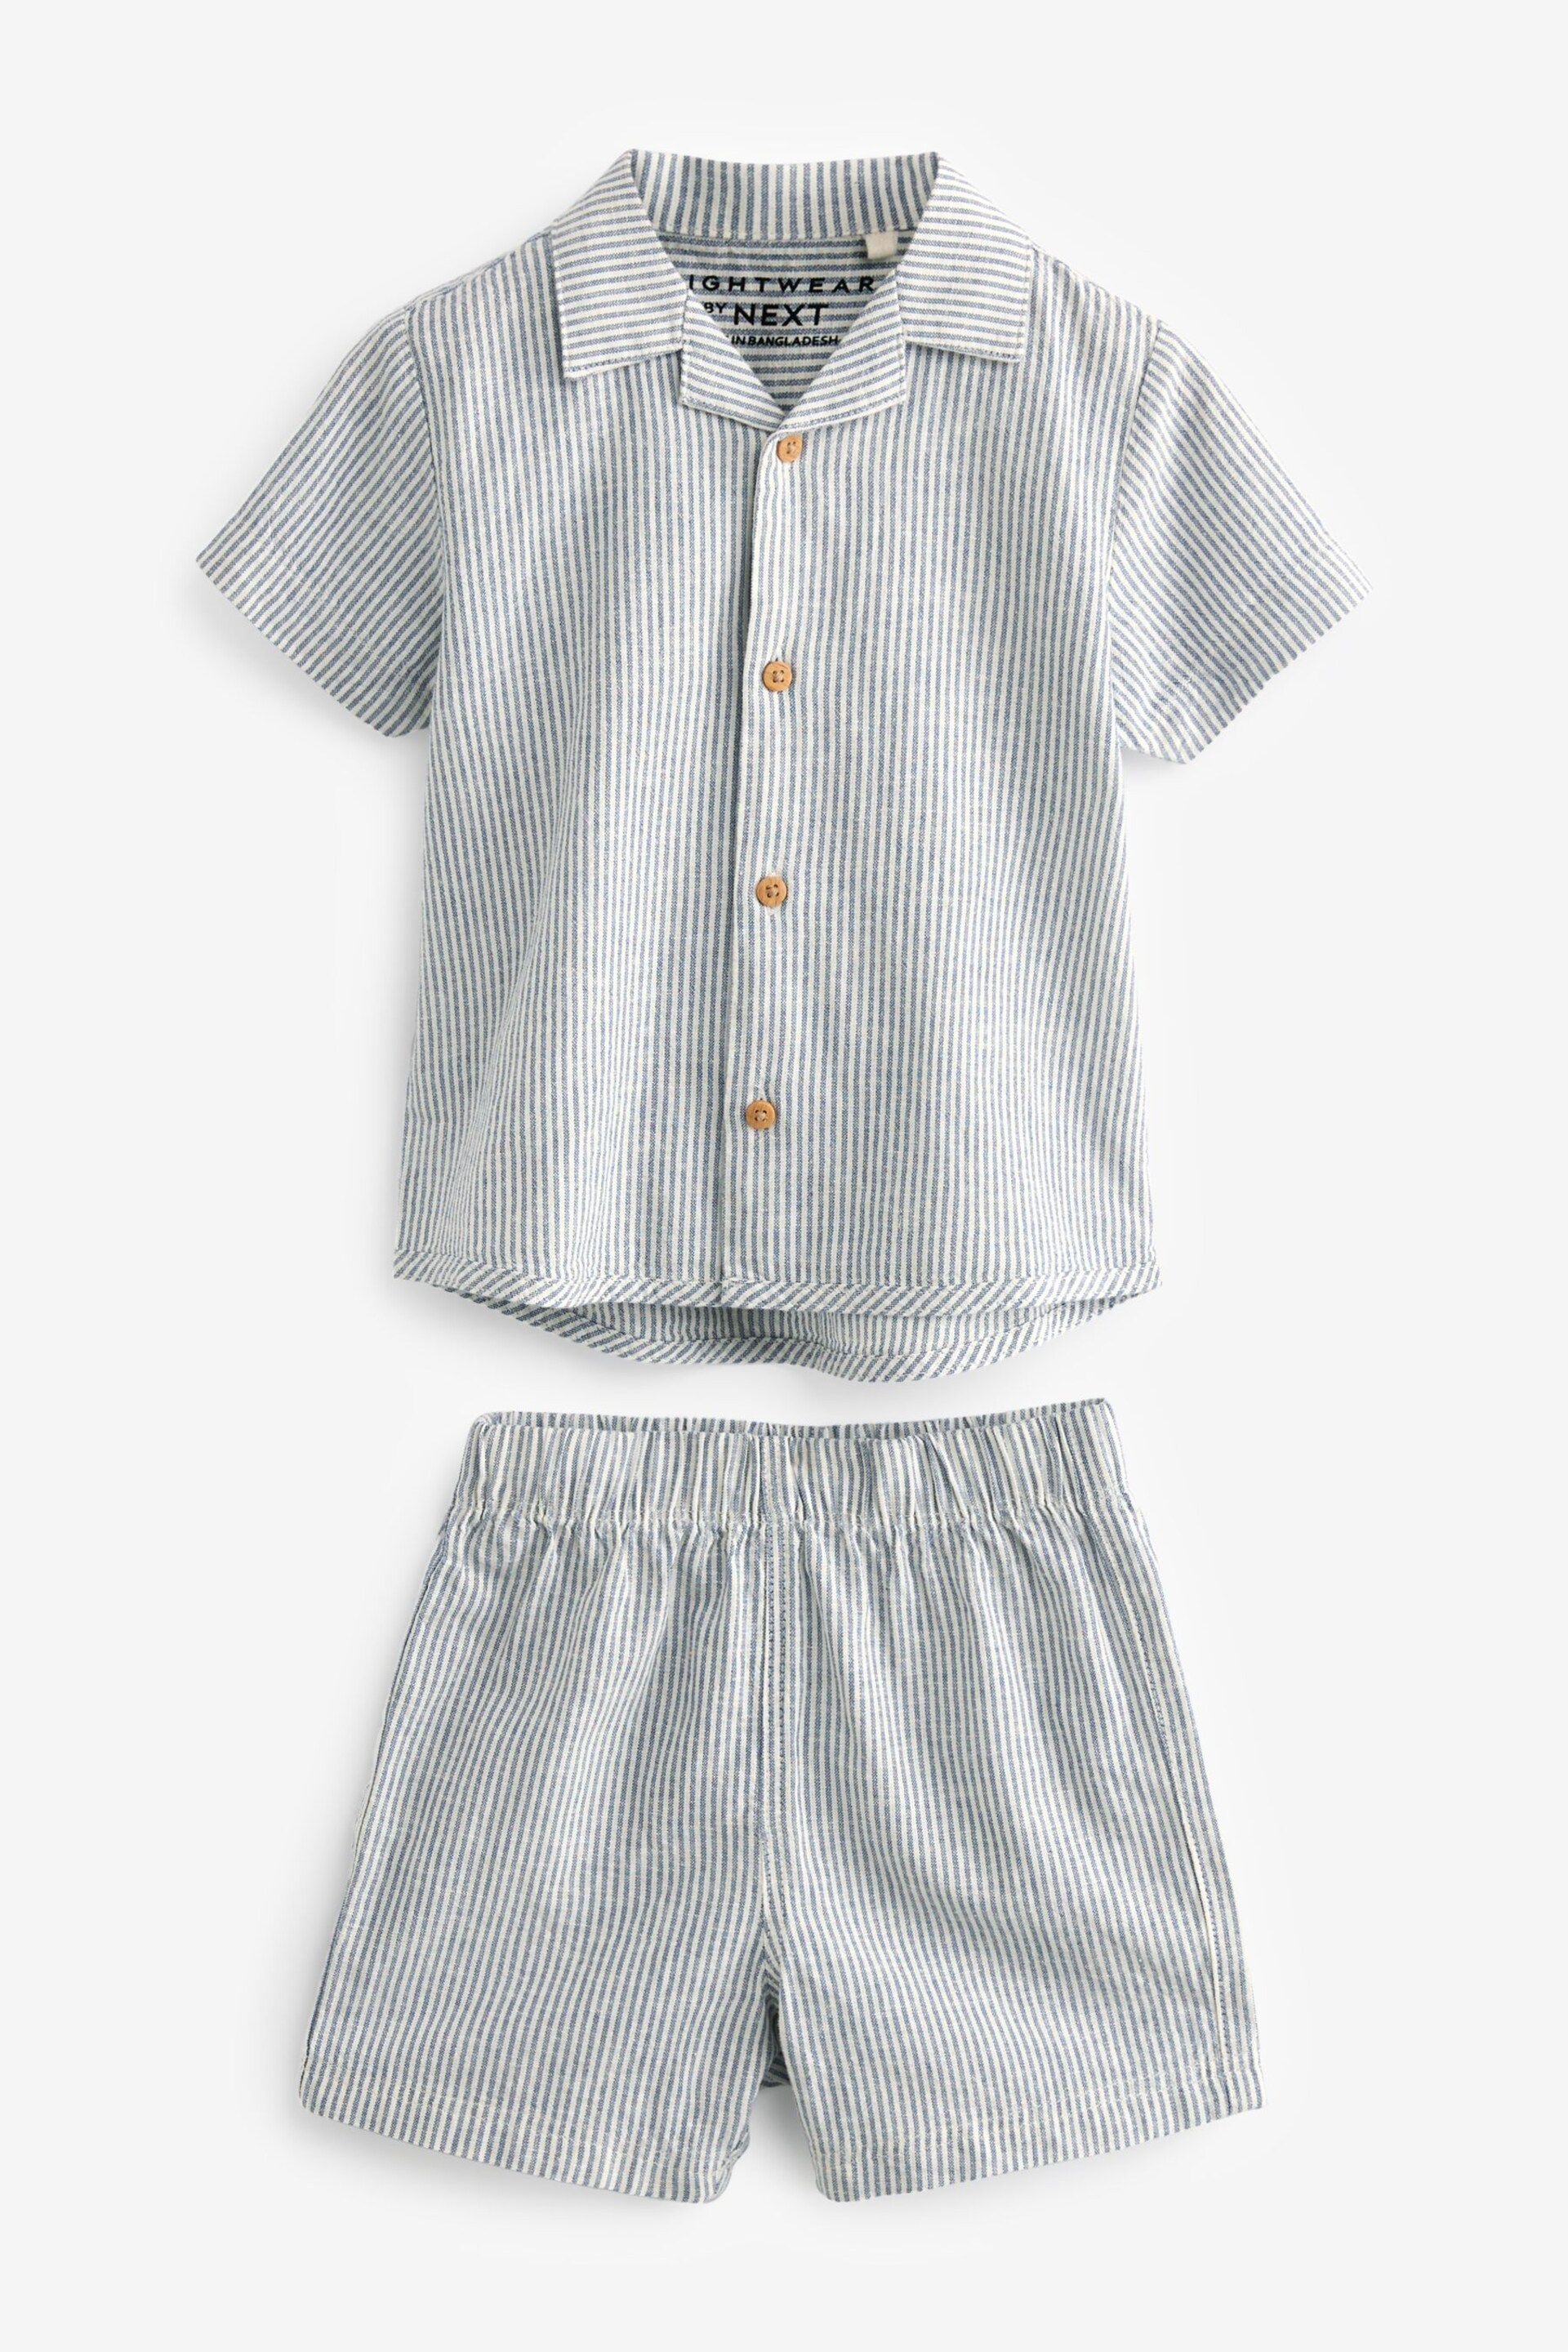 Blue/White Stripe Button Down Short Woven Pyjamas (9mths-8yrs) - Image 5 of 8